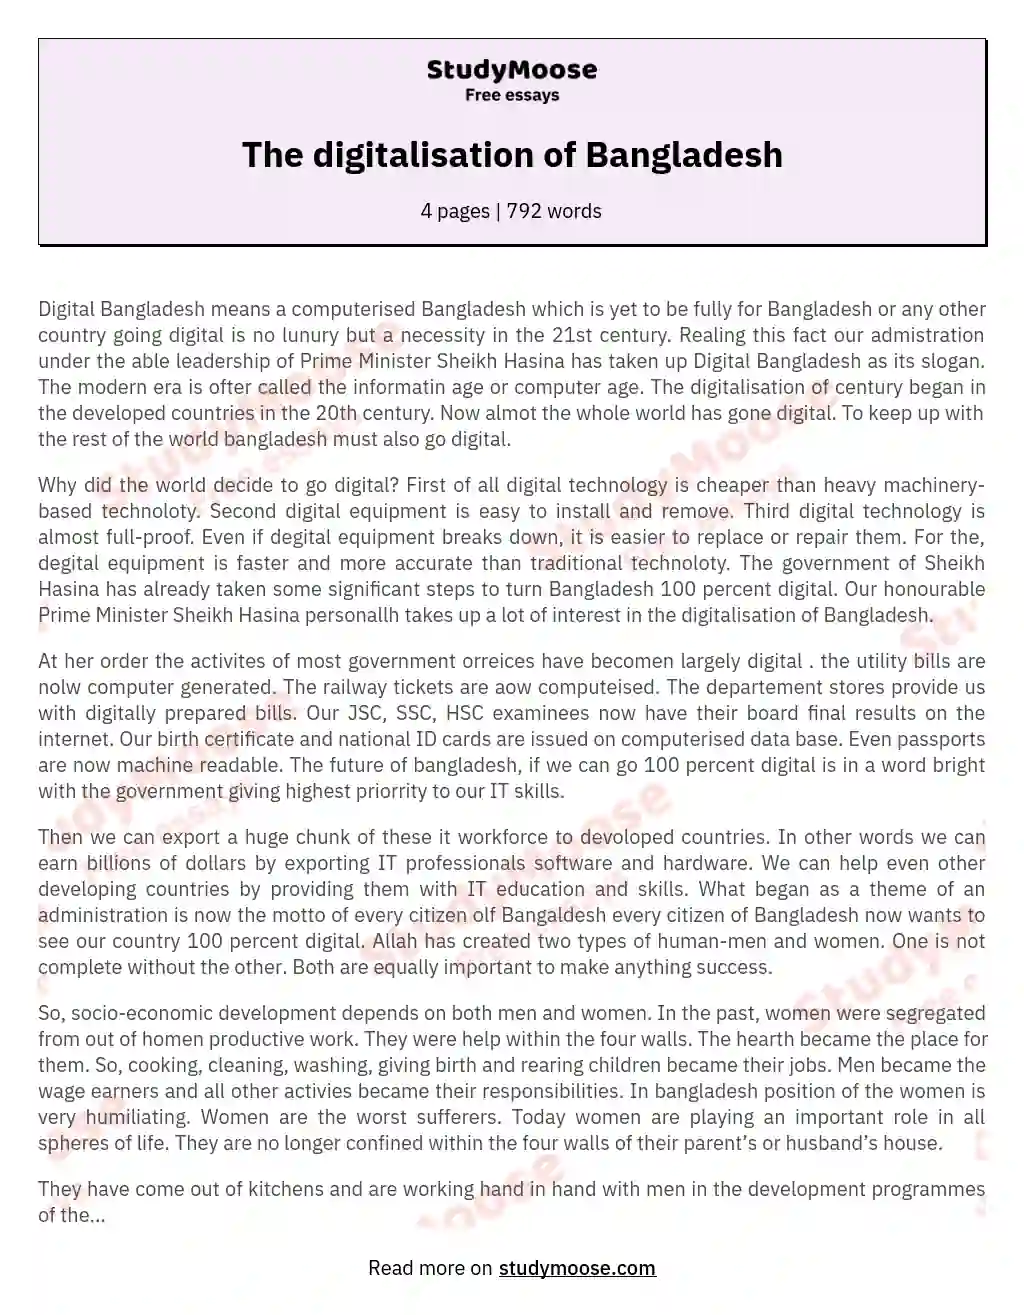 The digitalisation of Bangladesh essay